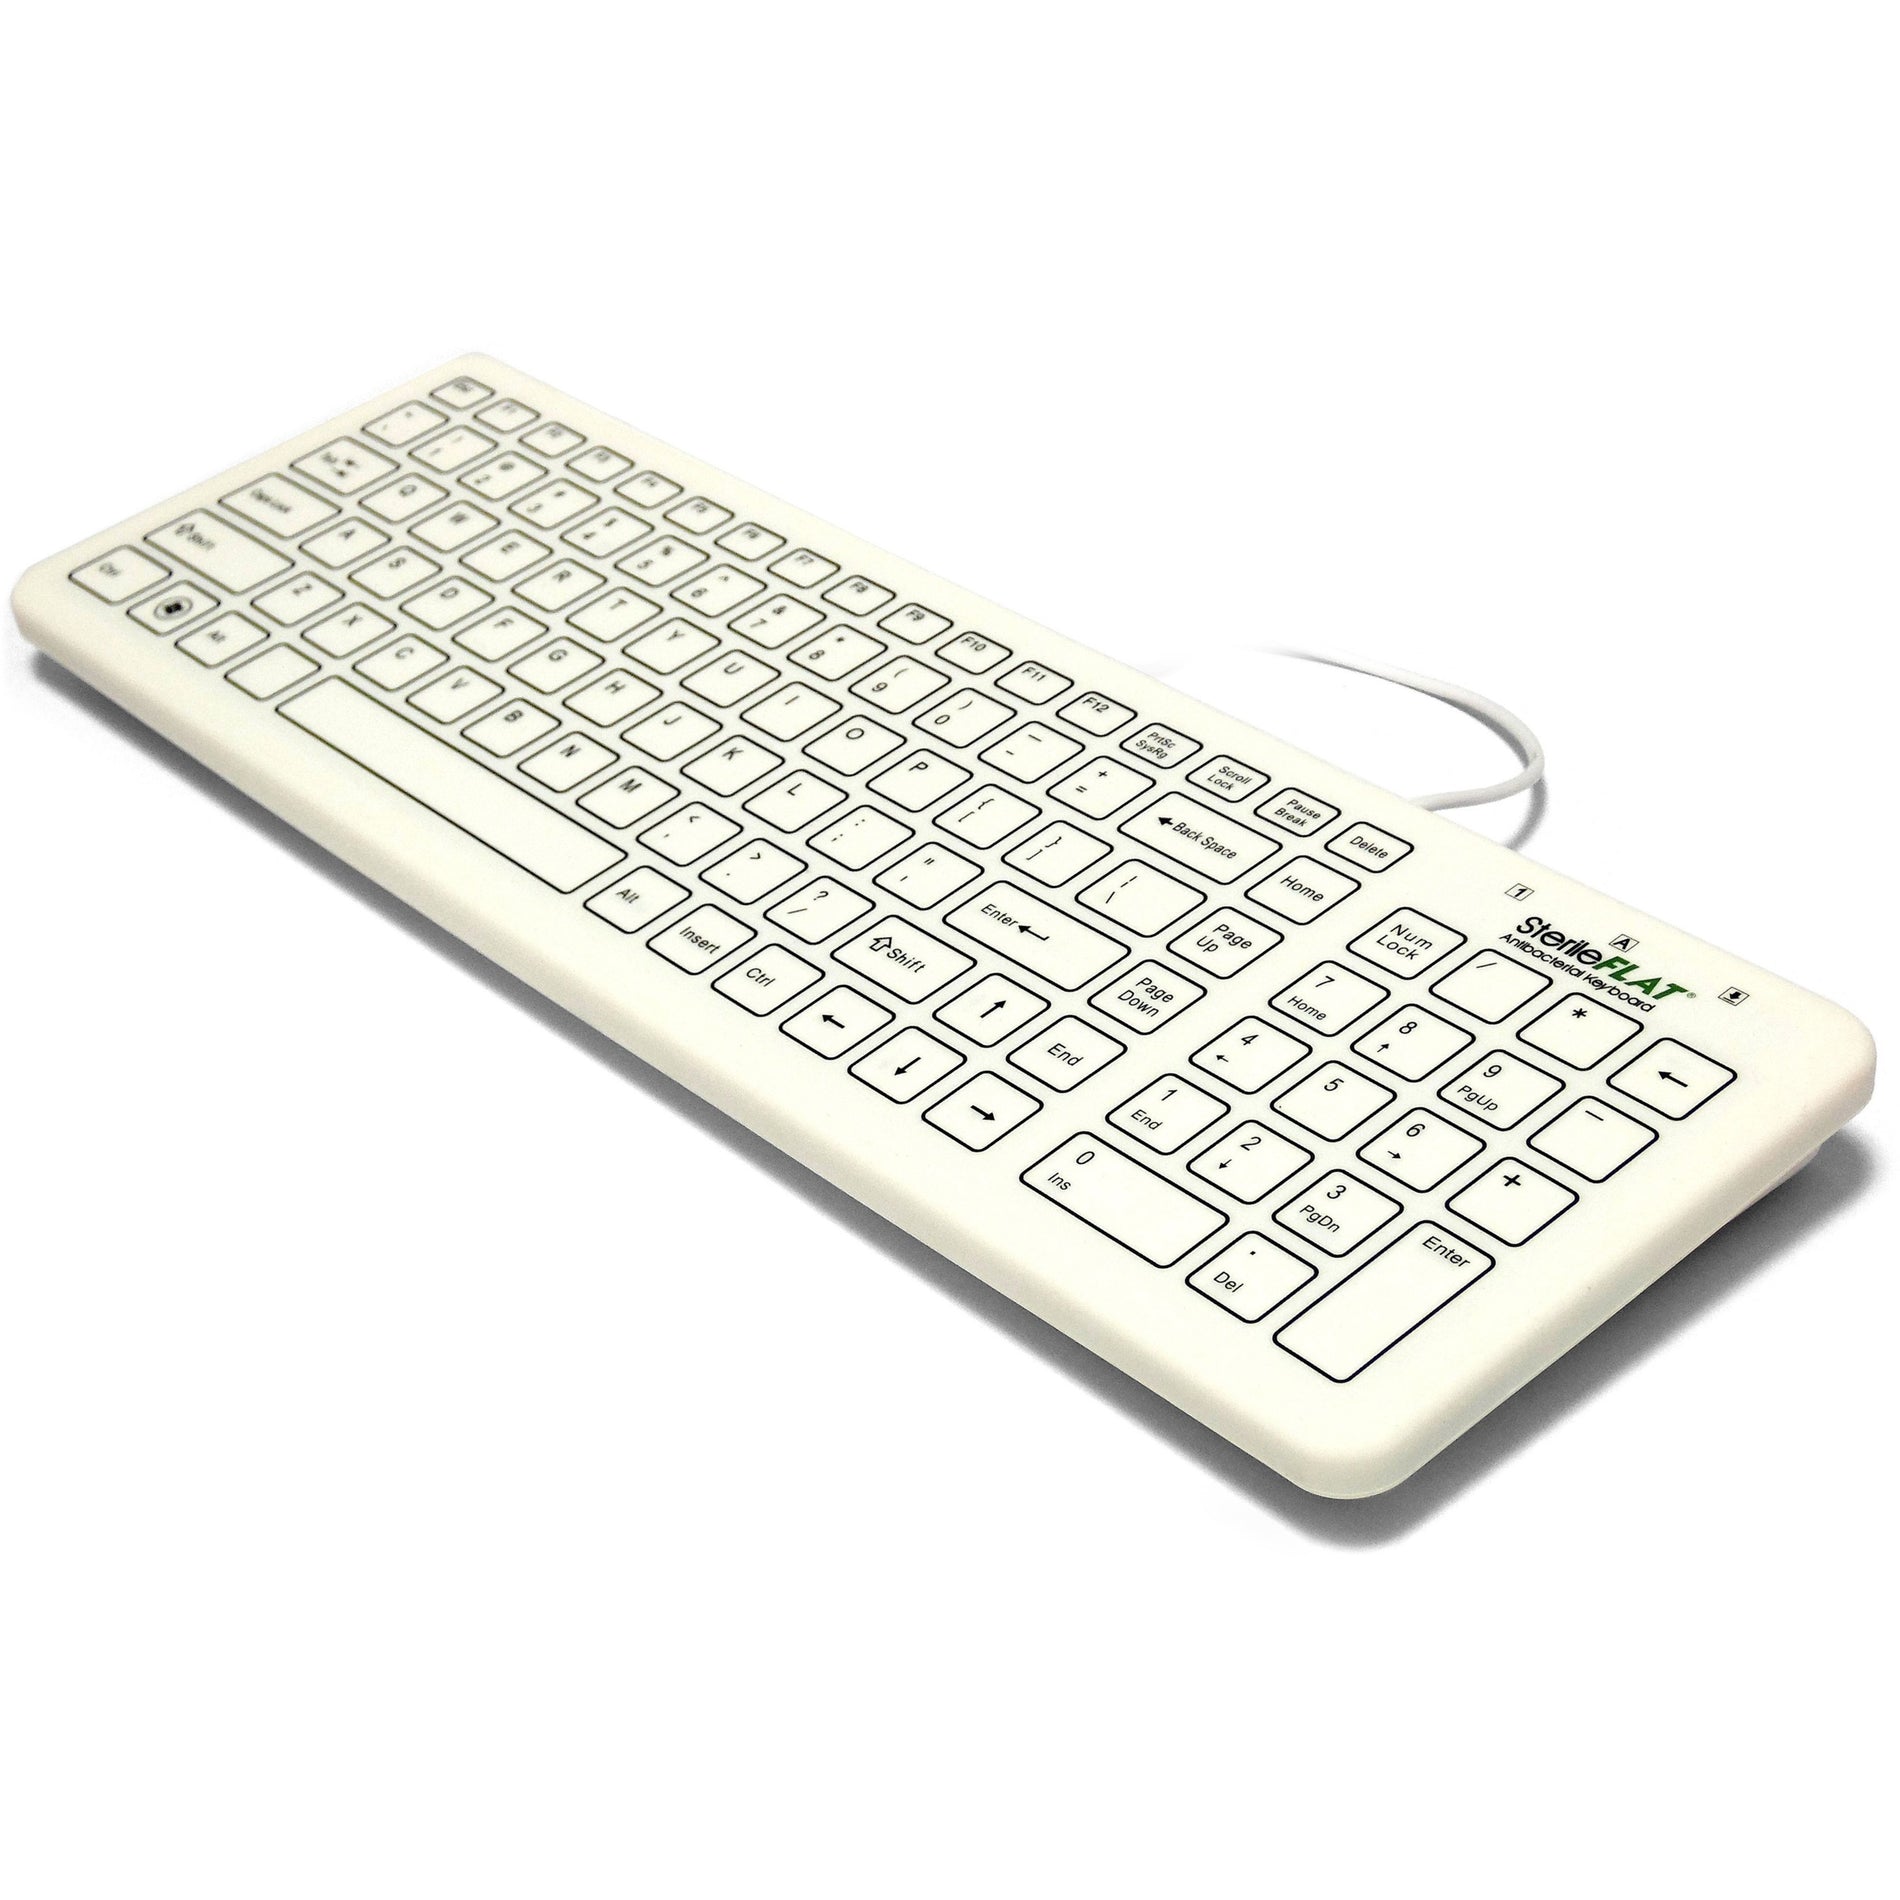 SterileFLAT SF09-02-V4 SterileFLAT Antibacterial Medical Washable Keyboard (White), USB